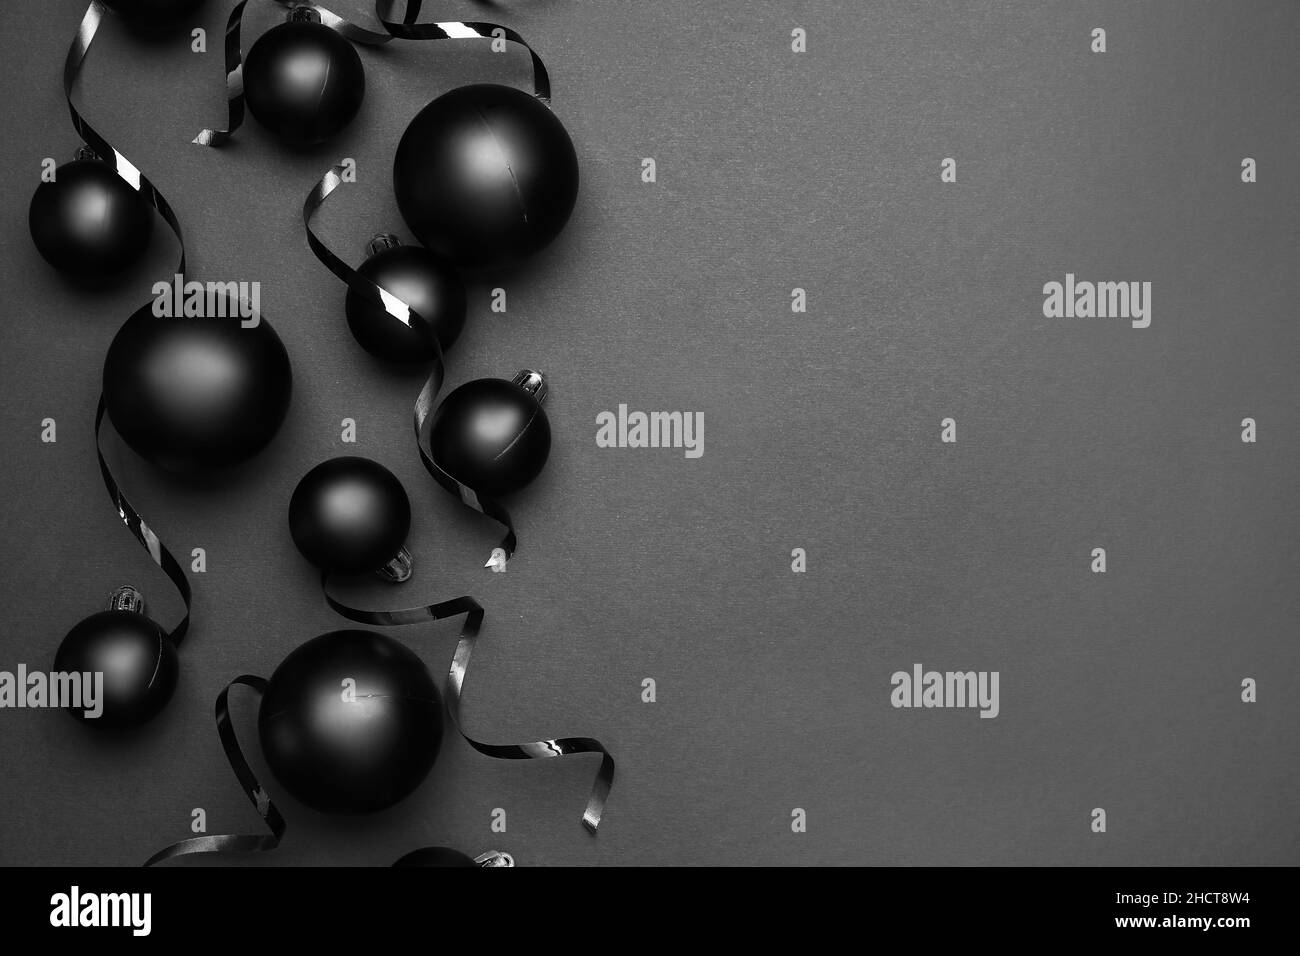 Beautiful Christmas balls and ribbons on dark background Stock Photo